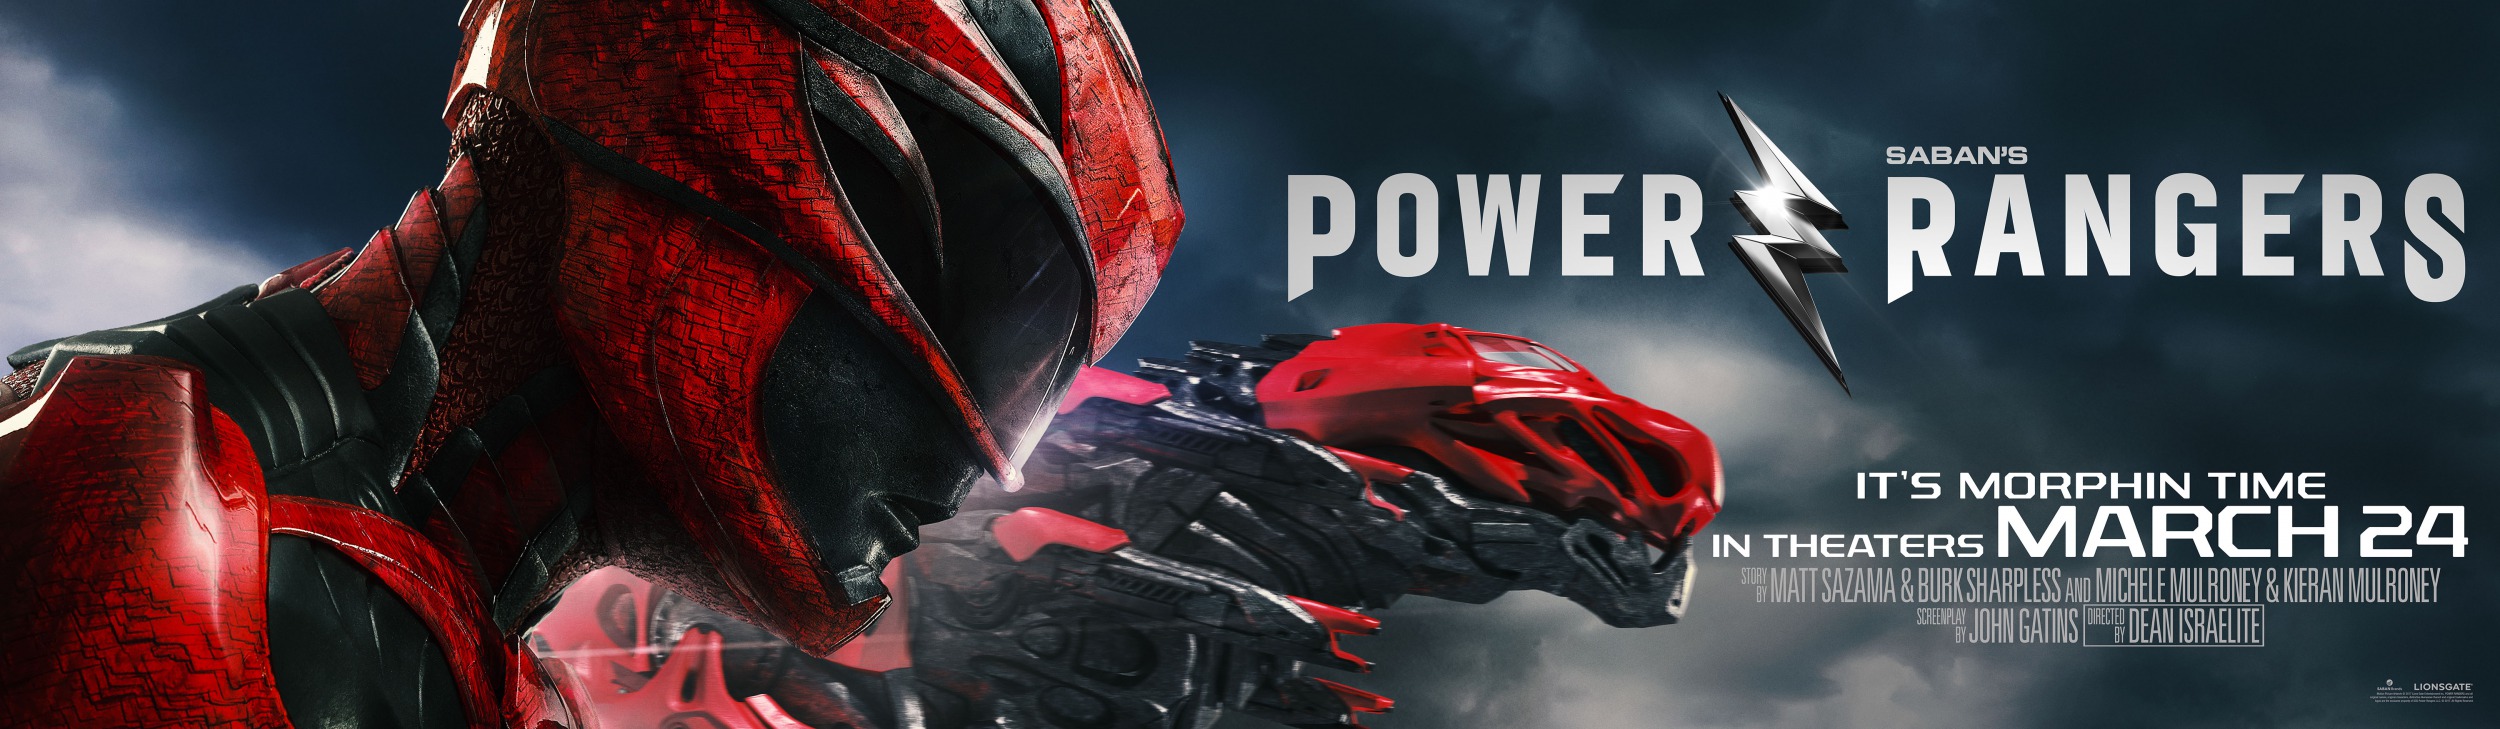 Mega Sized Movie Poster Image for Power Rangers (#34 of 50)